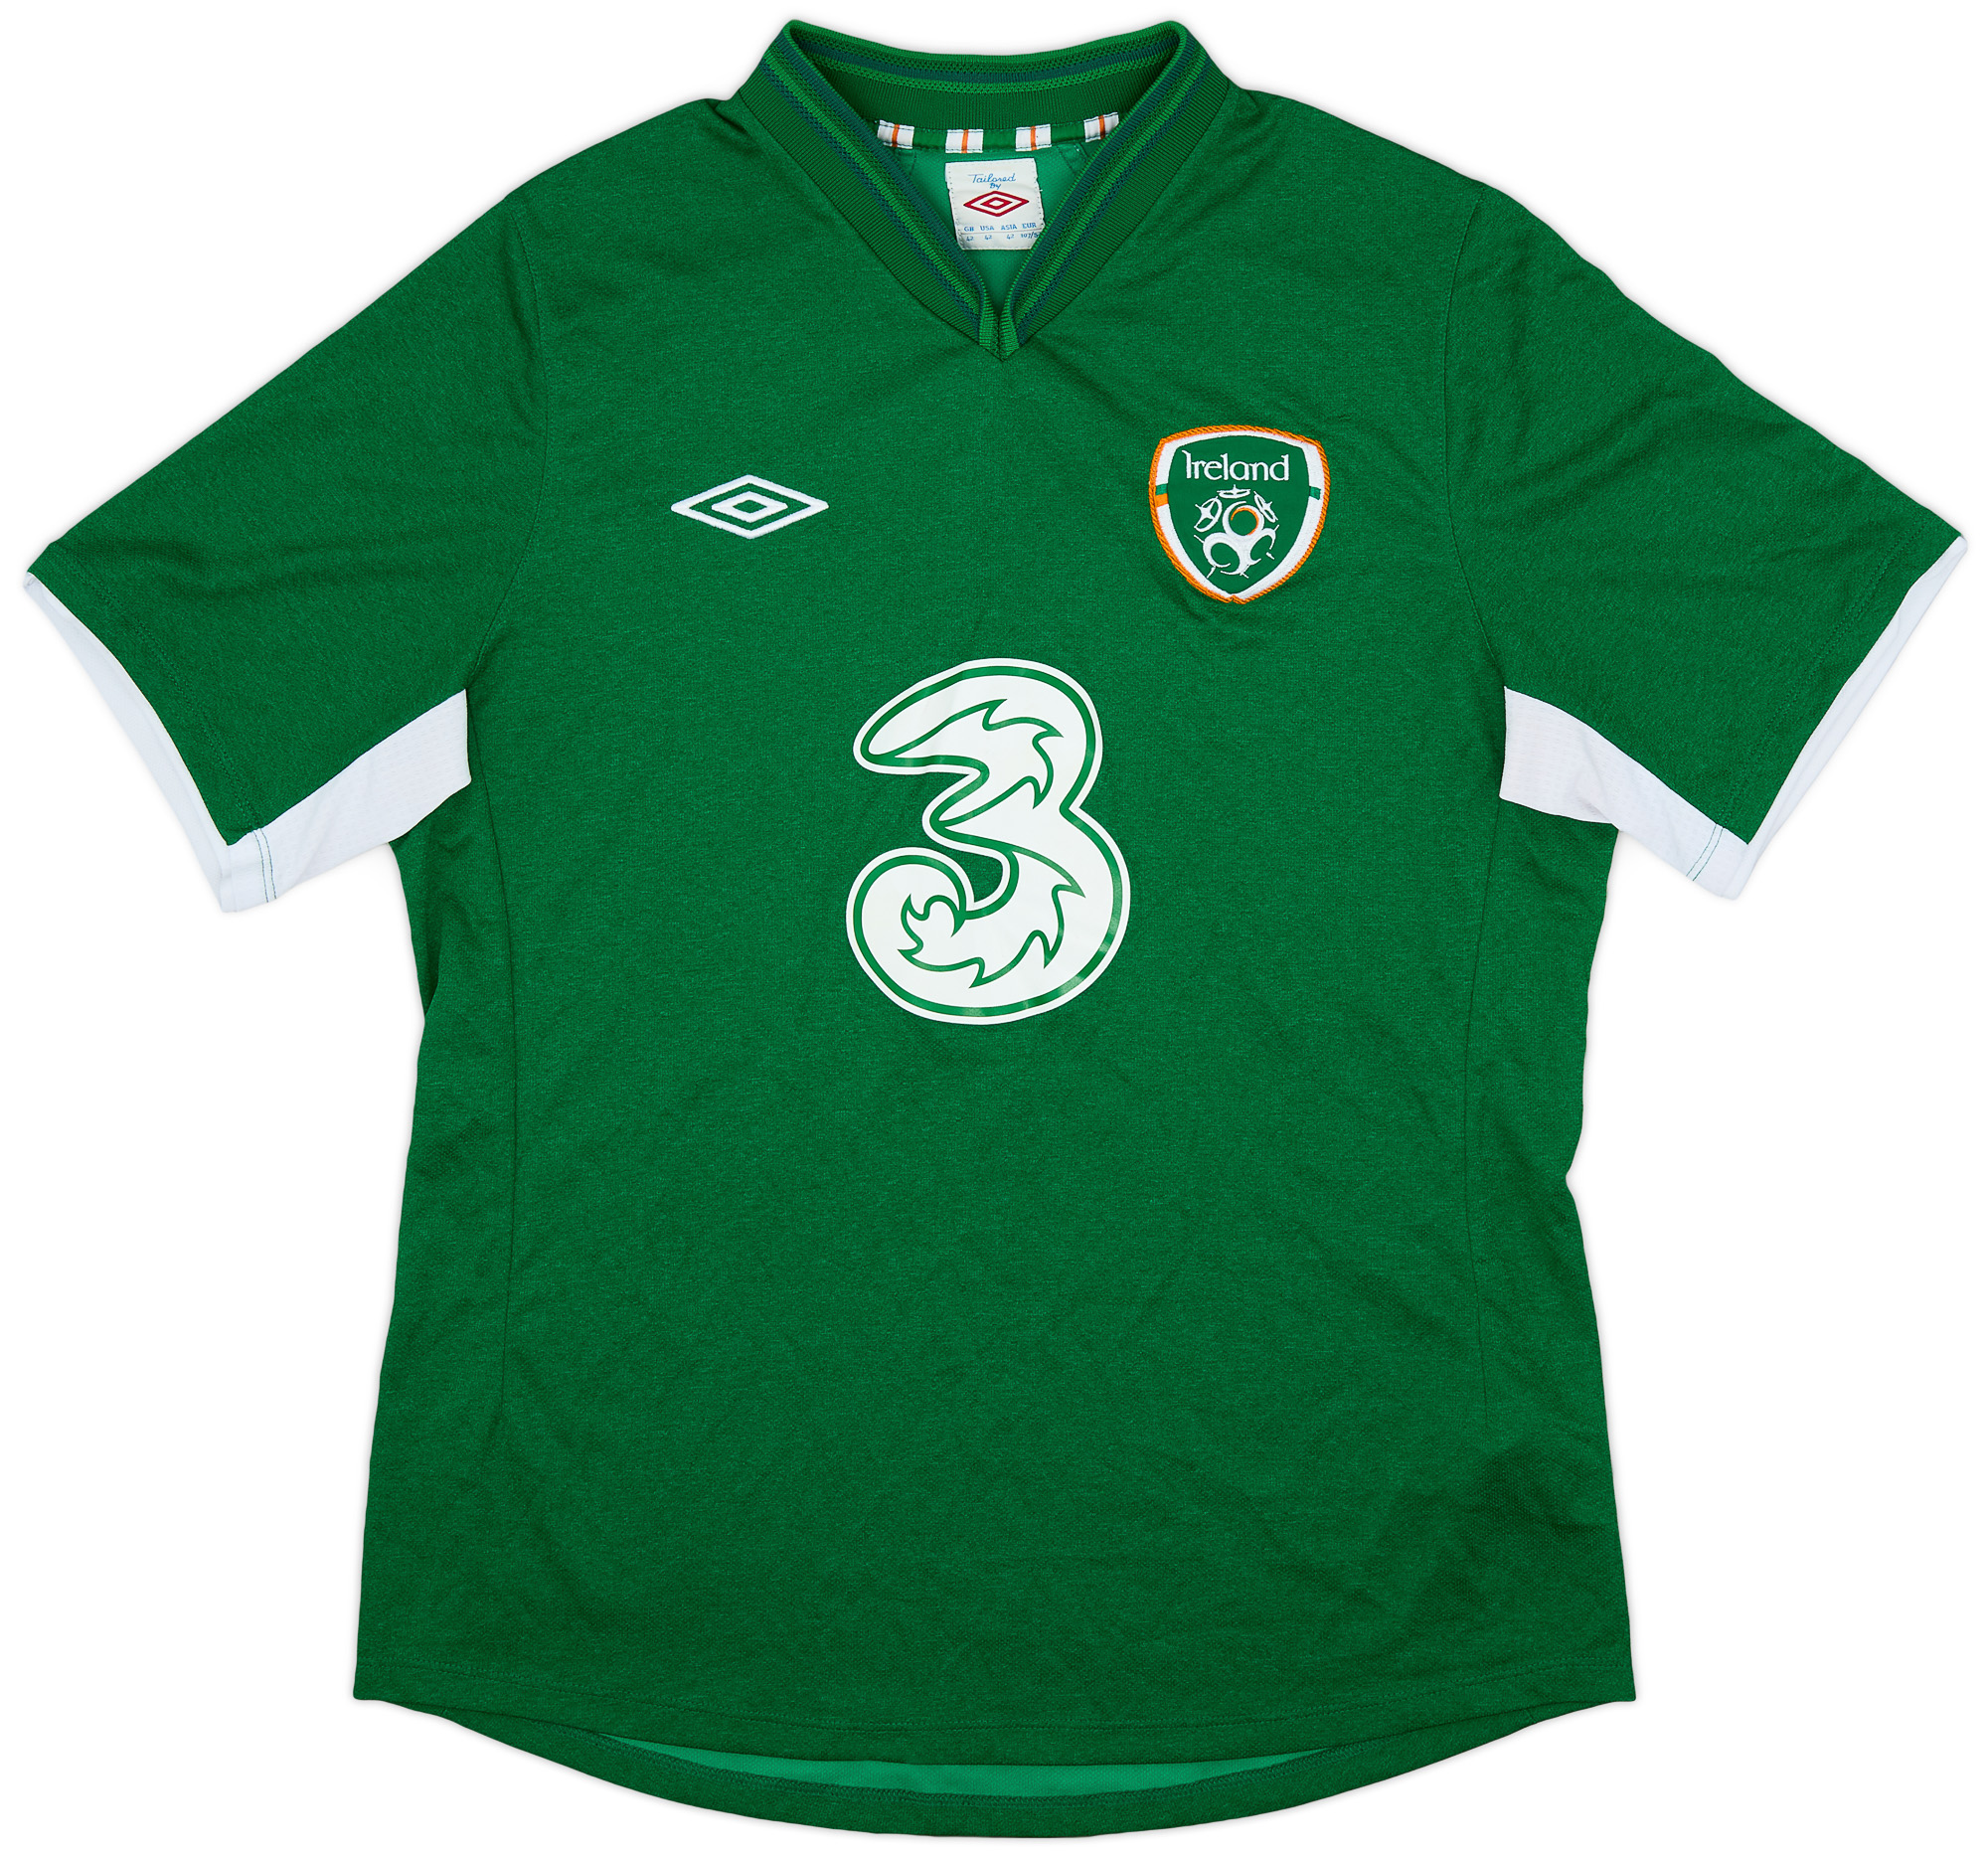 2013-14 Republic of Ireland Home Shirt - 8/10 - ()